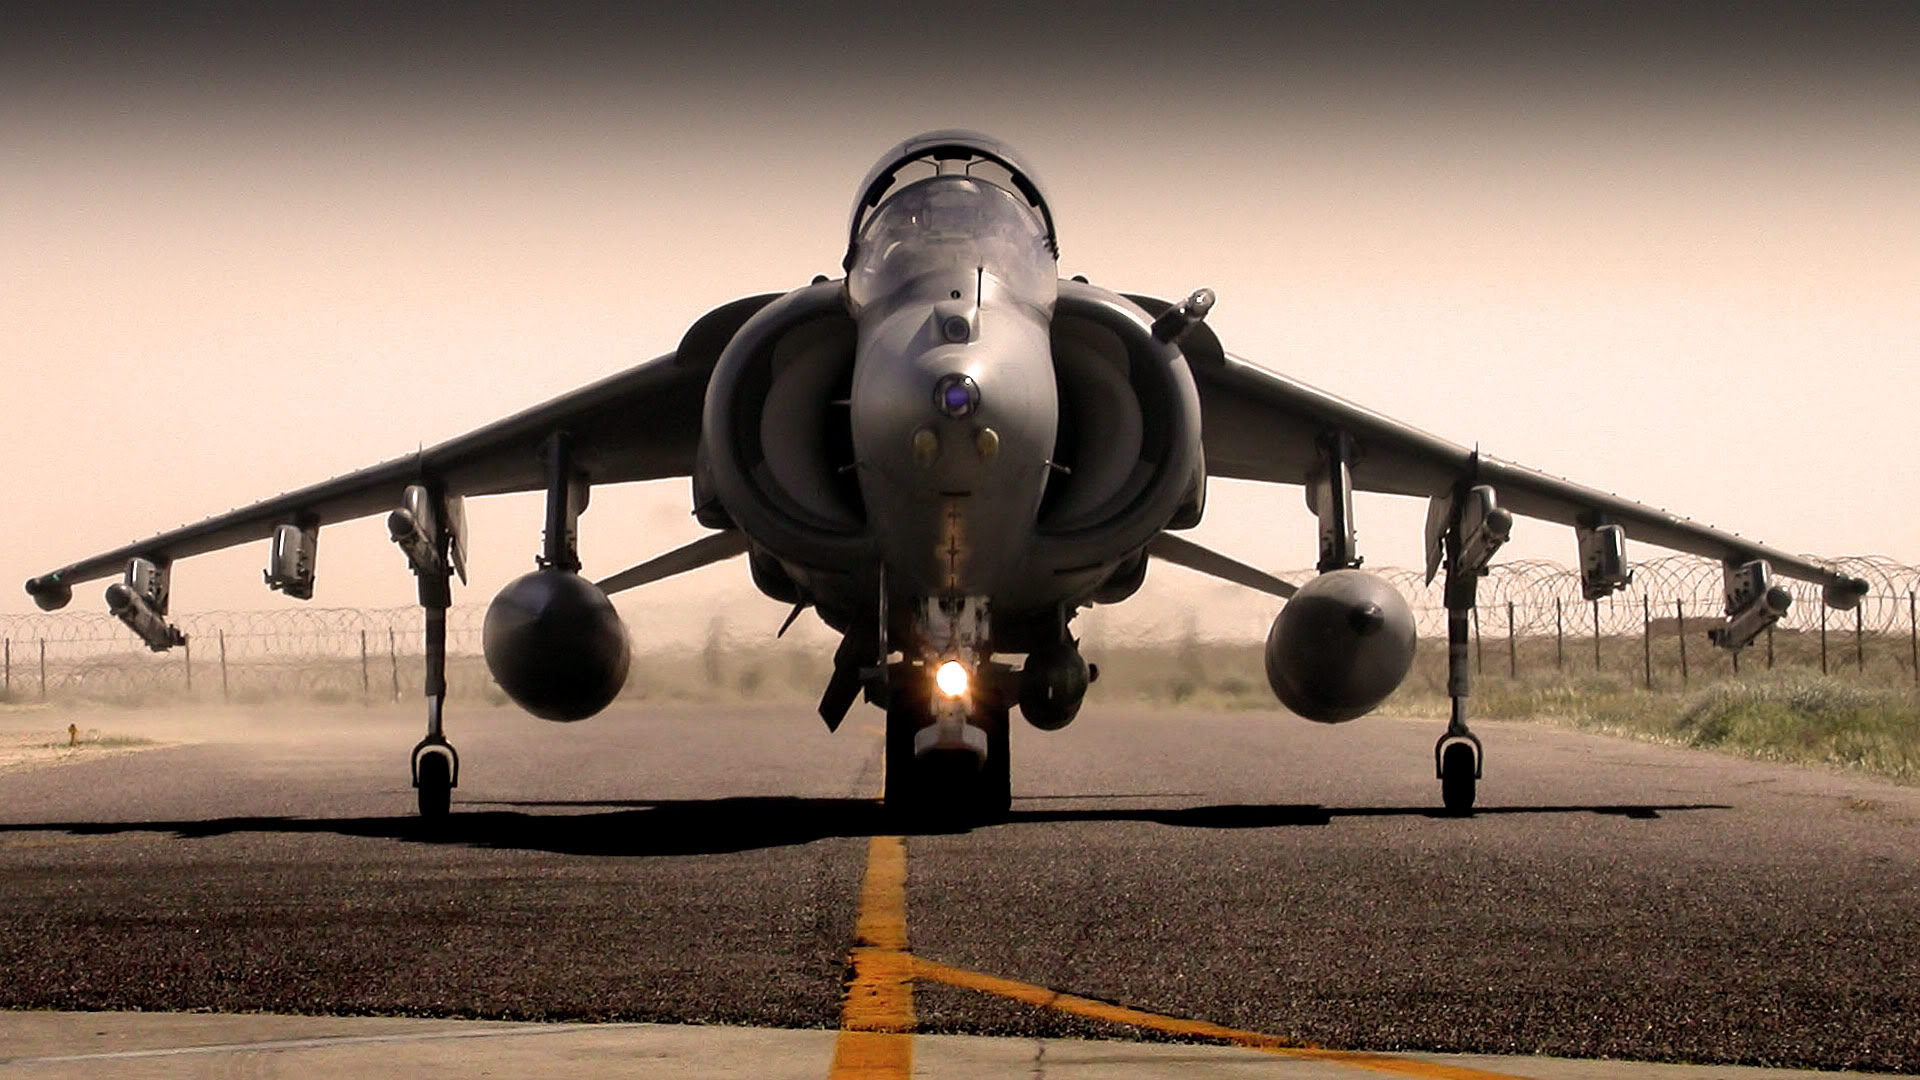 Royal Air Force Harrier II military jet fighter as desktop wallpaper.